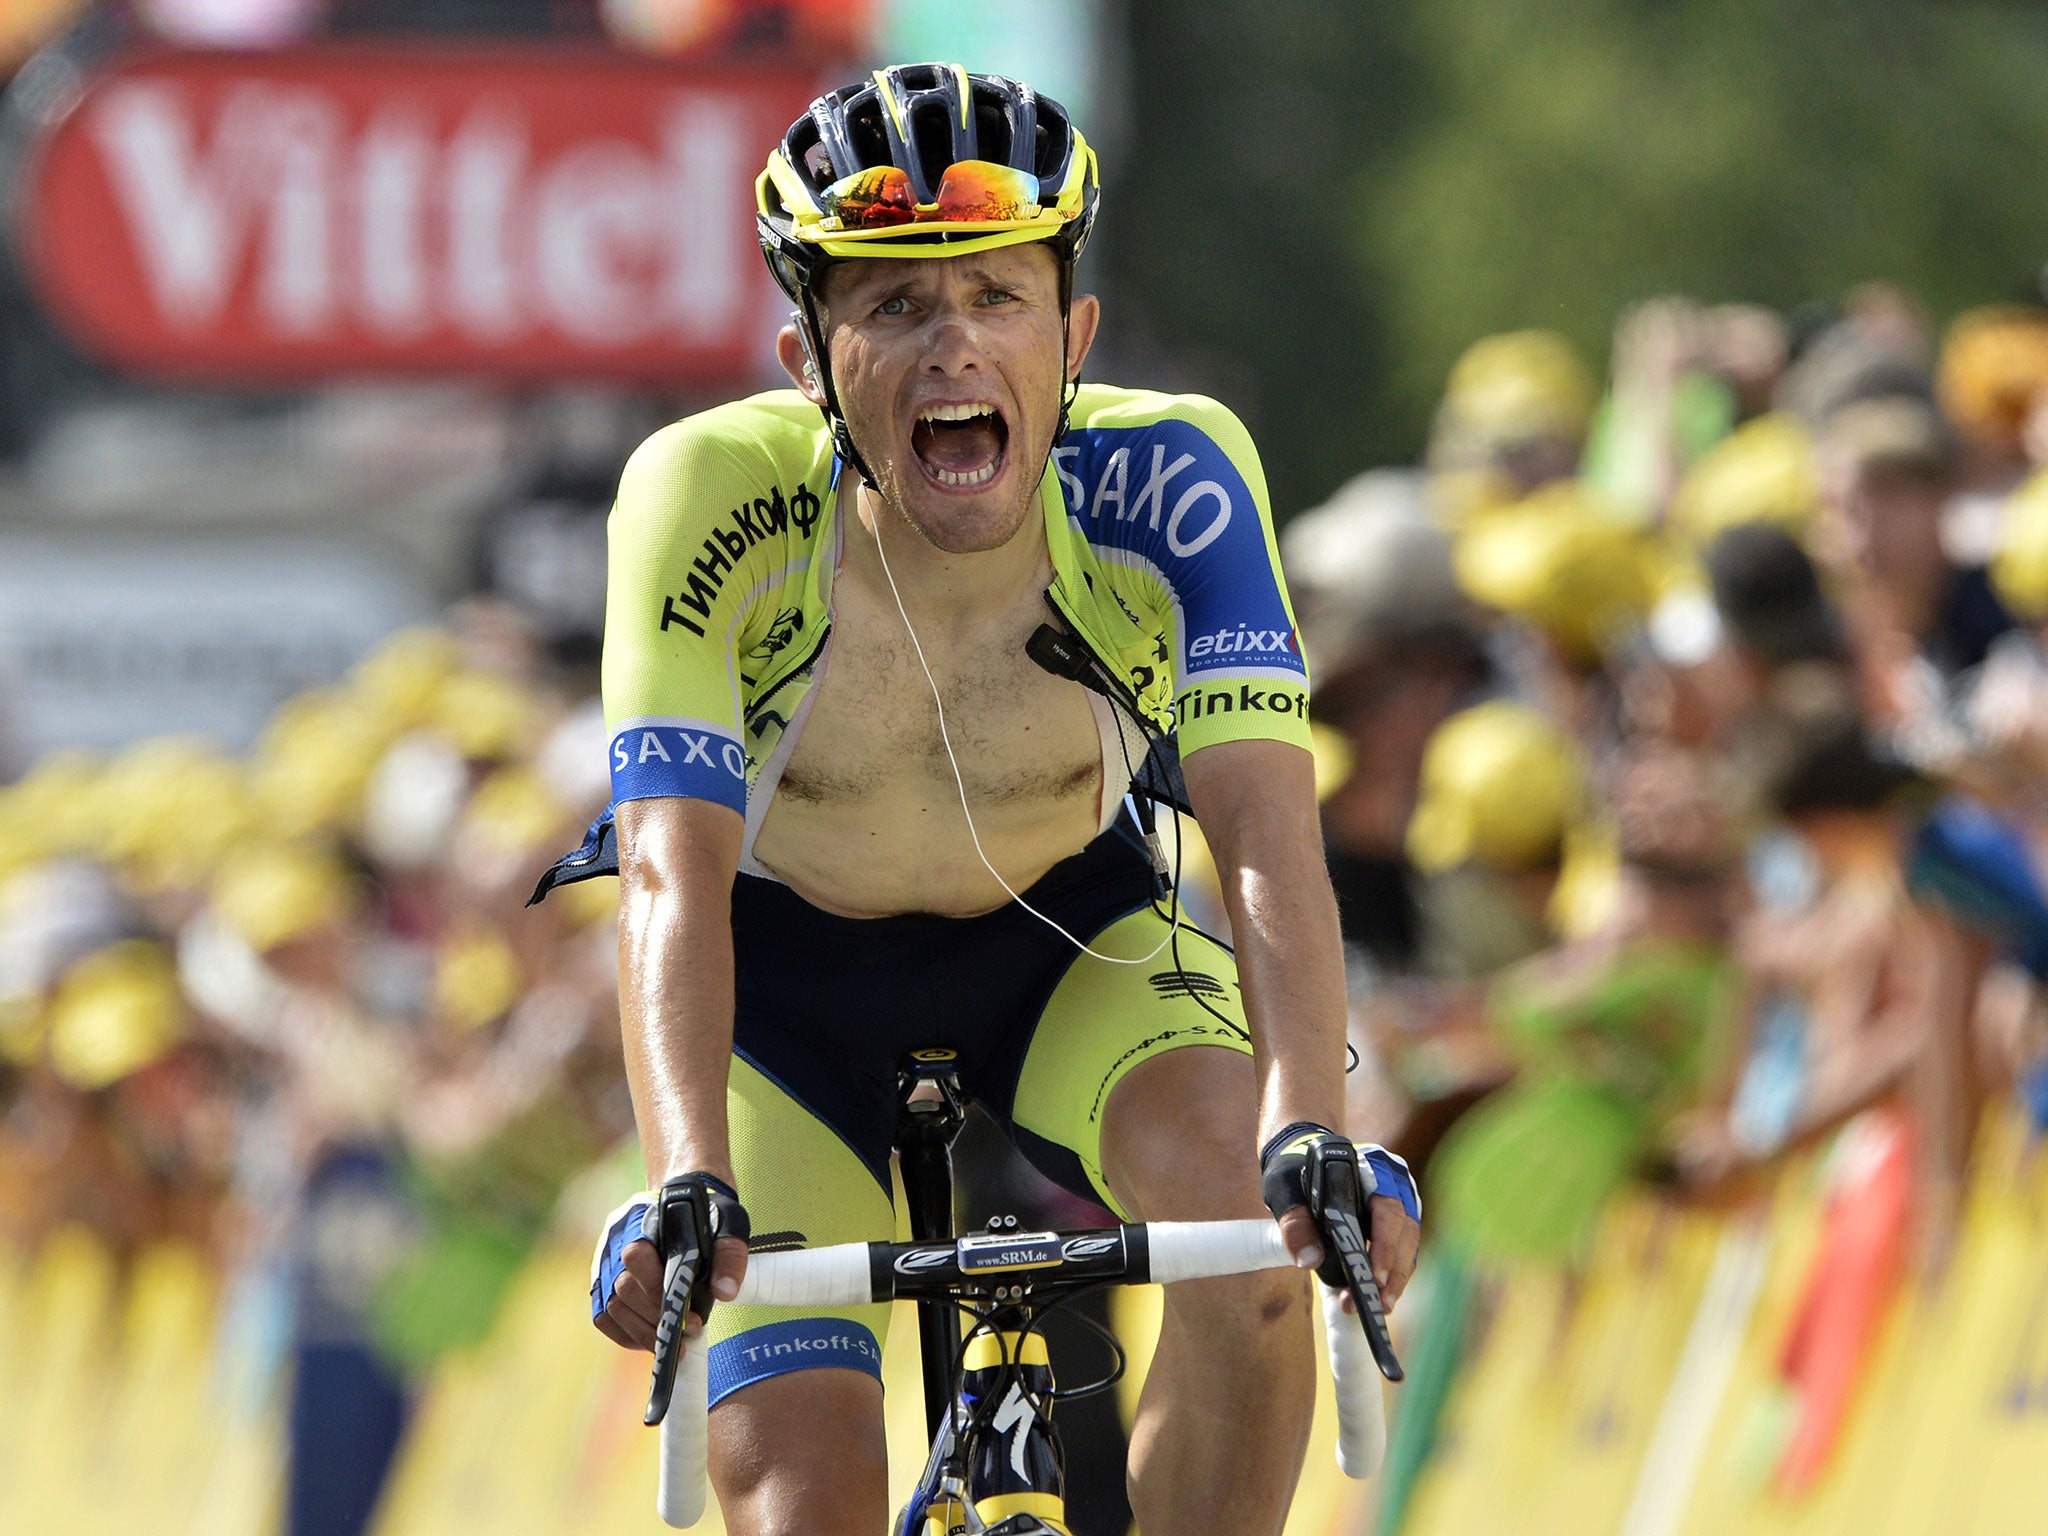 Tour de France 2014: Simon Yates makes major breakthrough | The ...